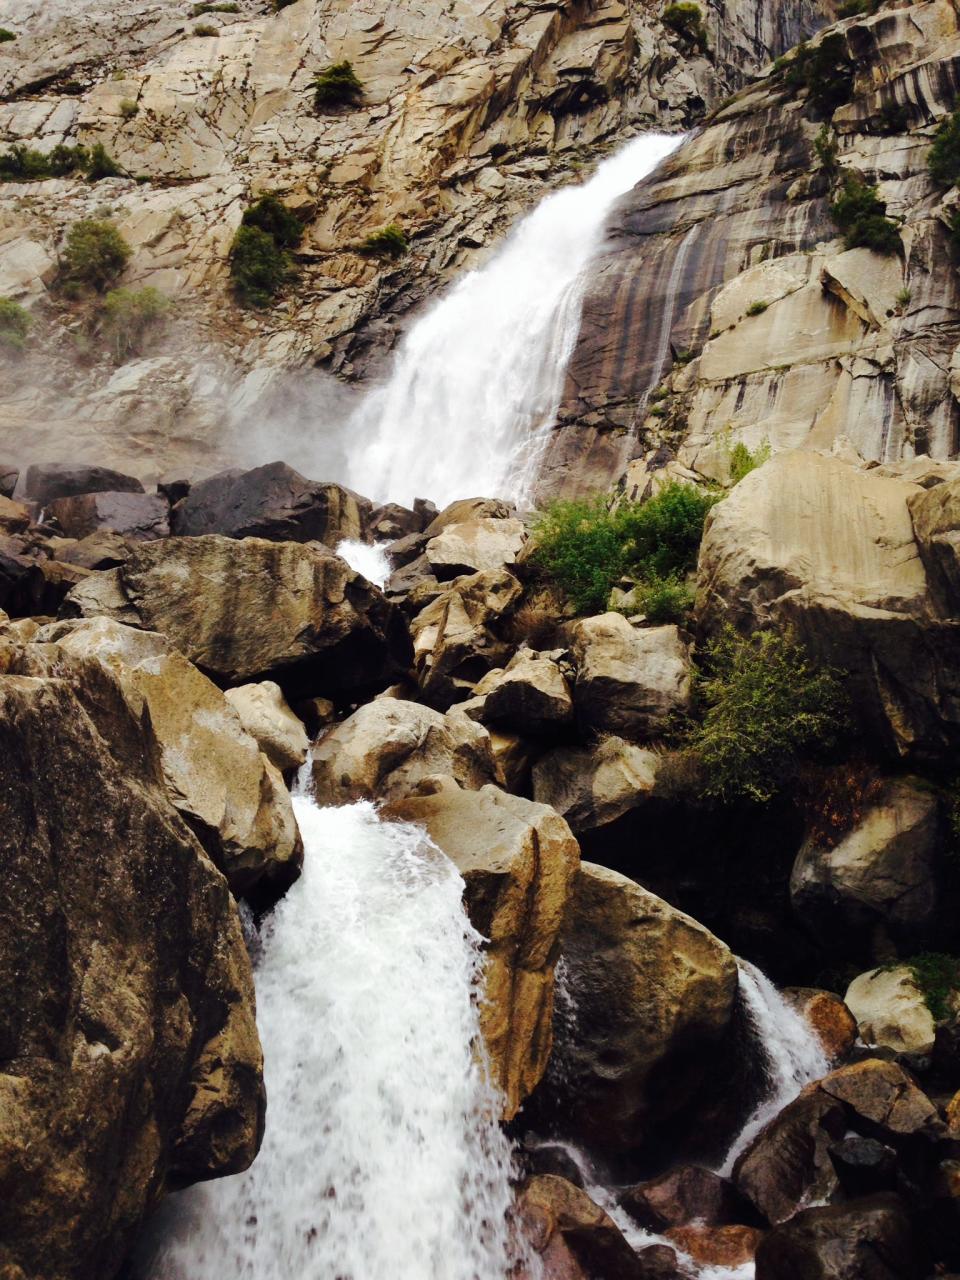 Wapama Falls thunders into Hetch Hetchy Reservoir in Yosemite National Park.